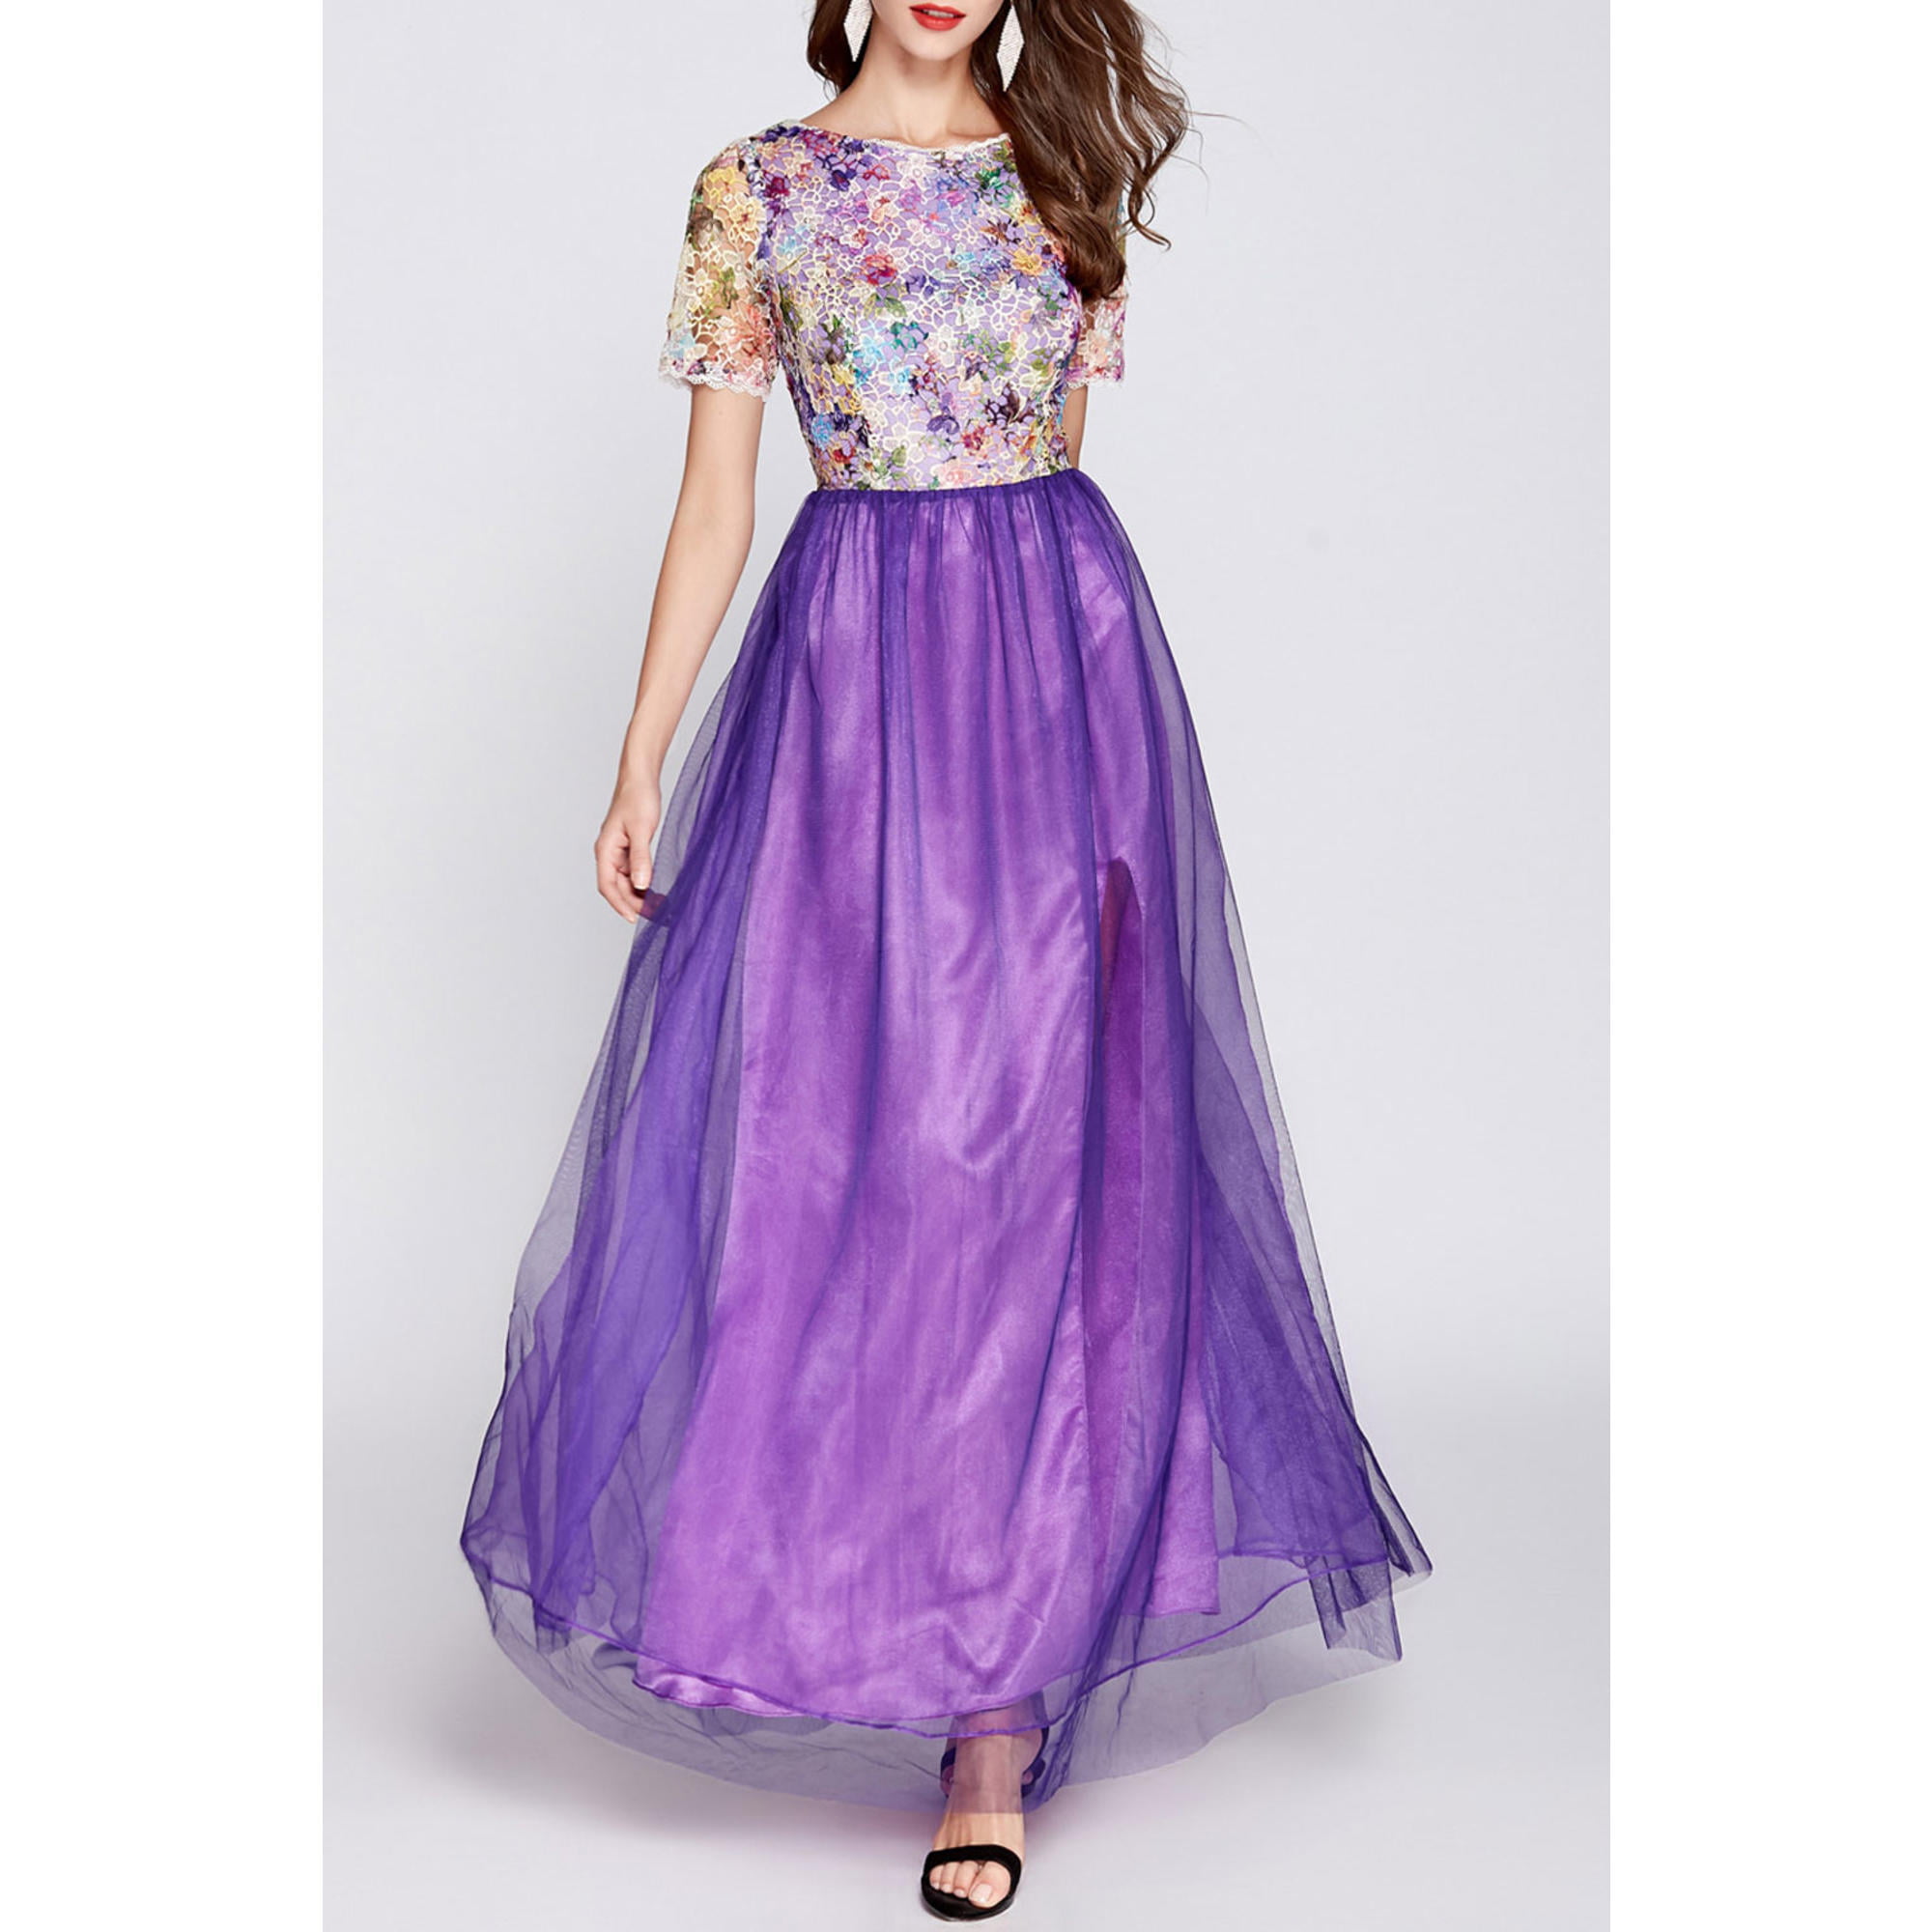 Unomatch - Junior Short Sleeve Floral Mesh Evening Dress - Walmart.com ...